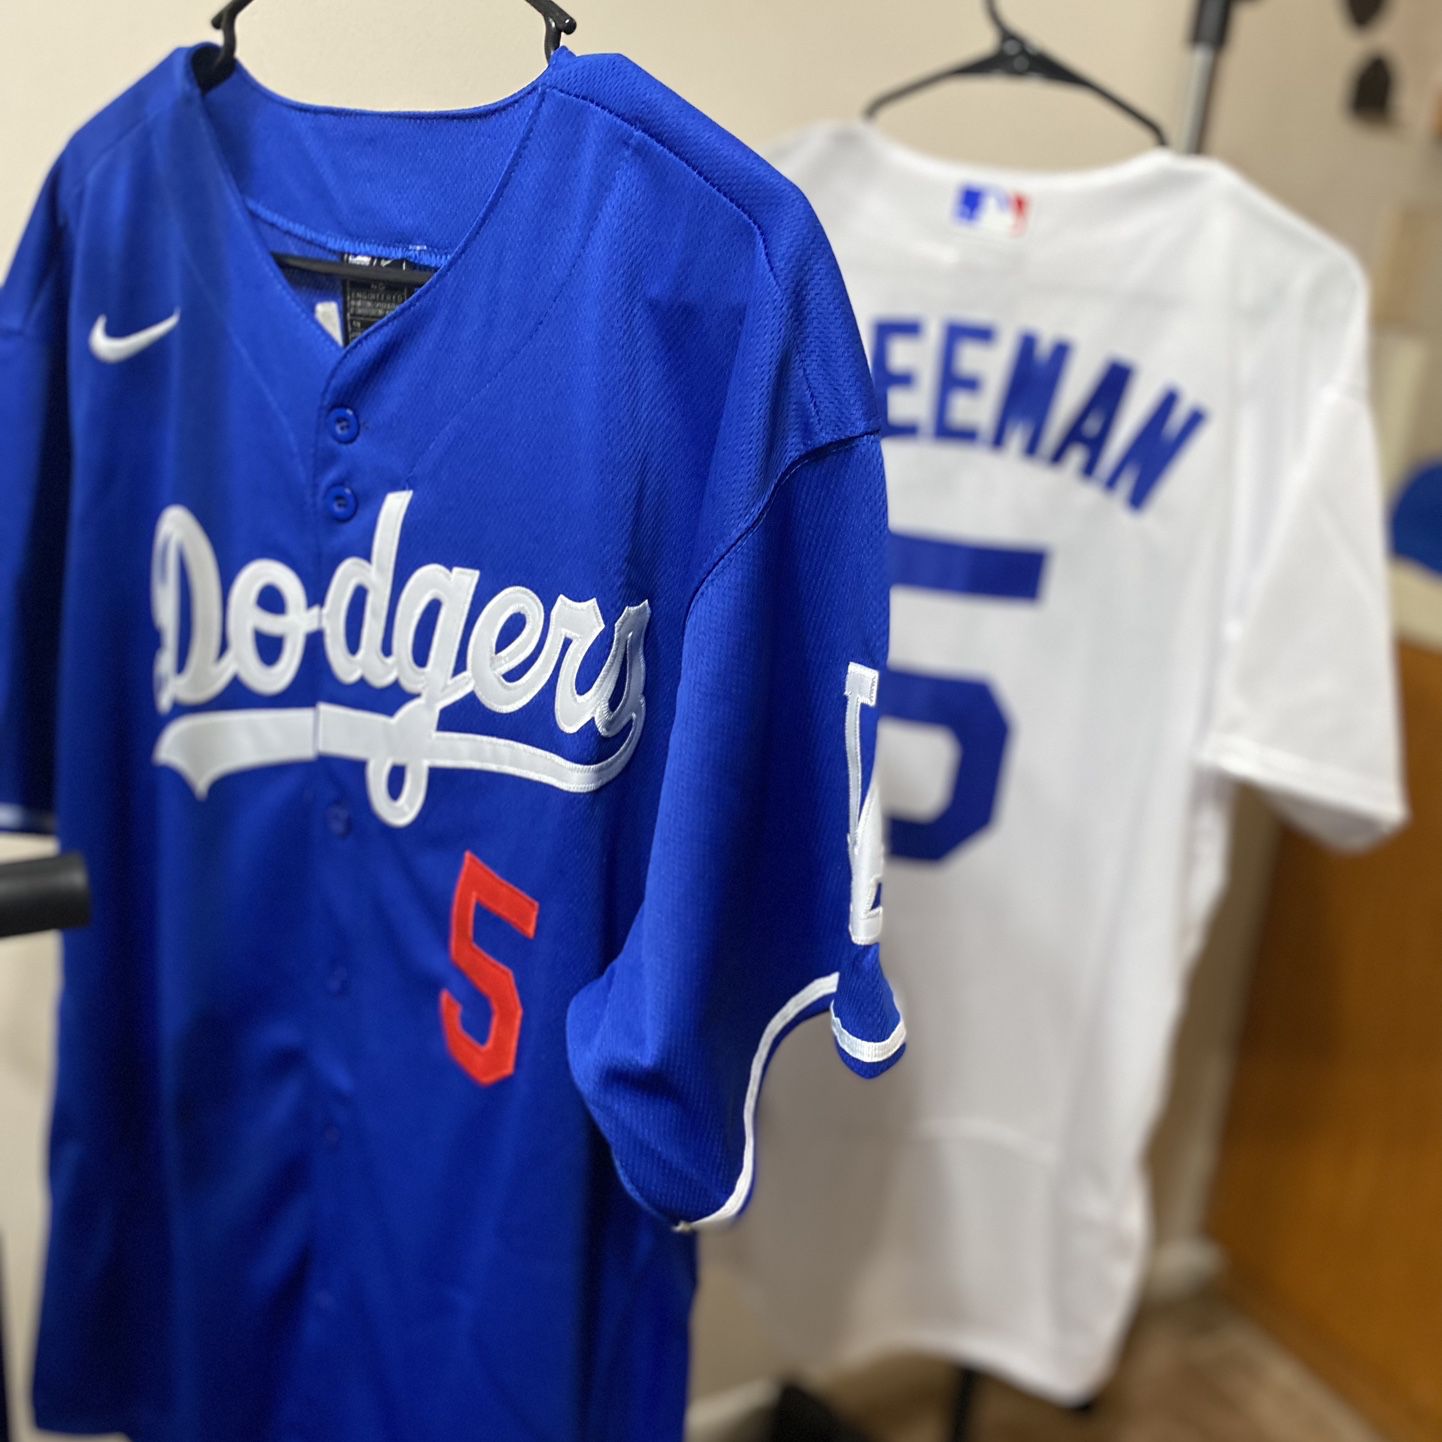 Los Angeles Dodgers tank top jersey for Sale in Whittier, CA - OfferUp